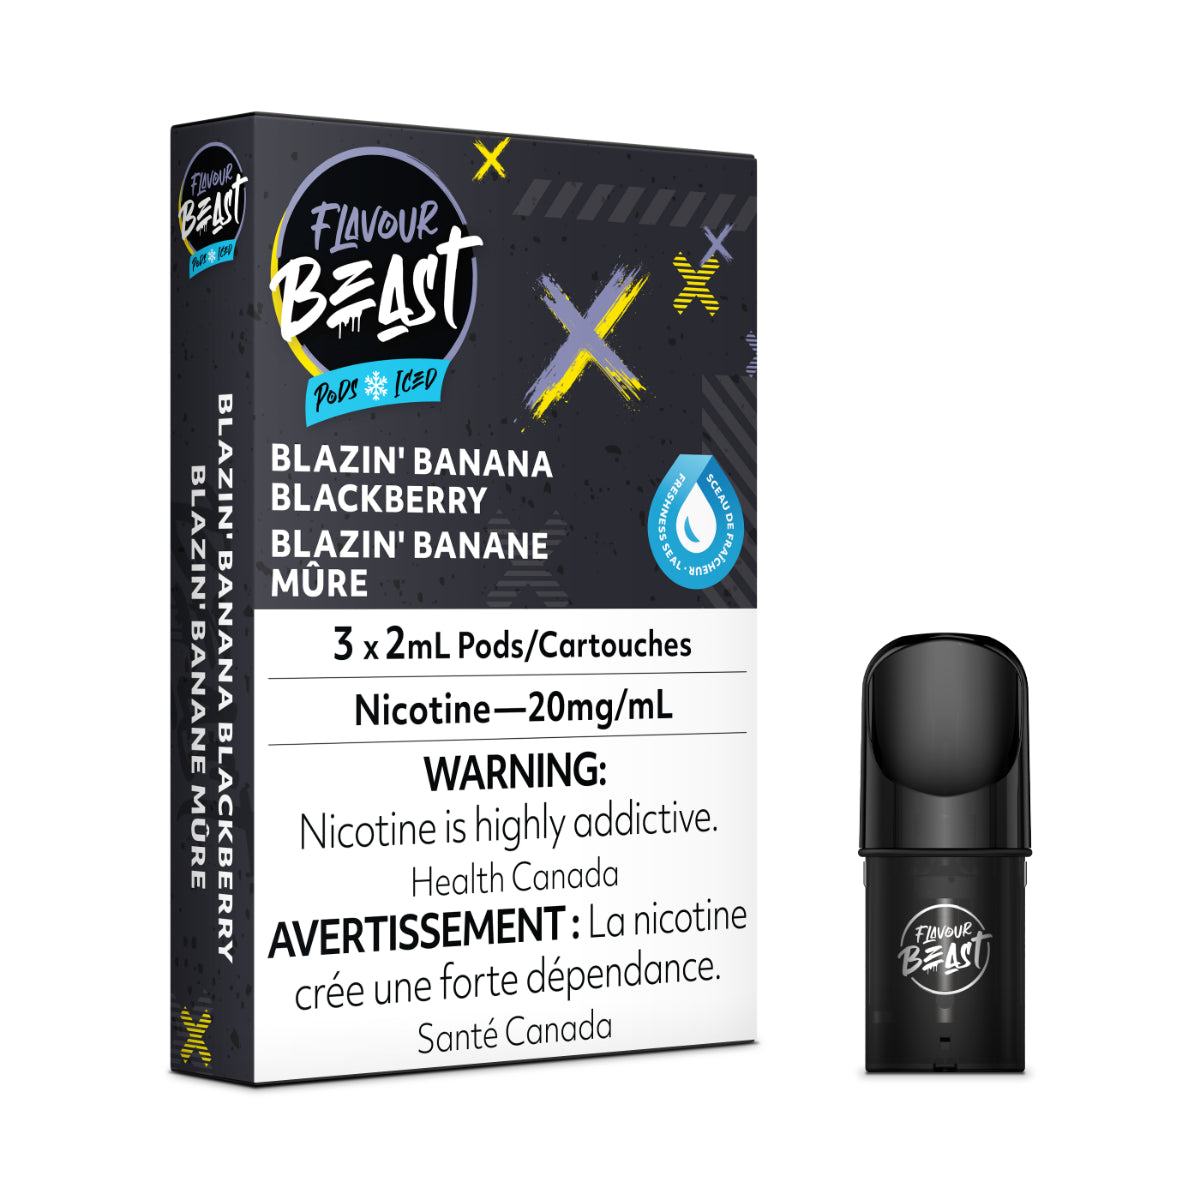 Blazin Banana Blackberry - Flavour Beast Pod Pack - 20mg - EXCISED